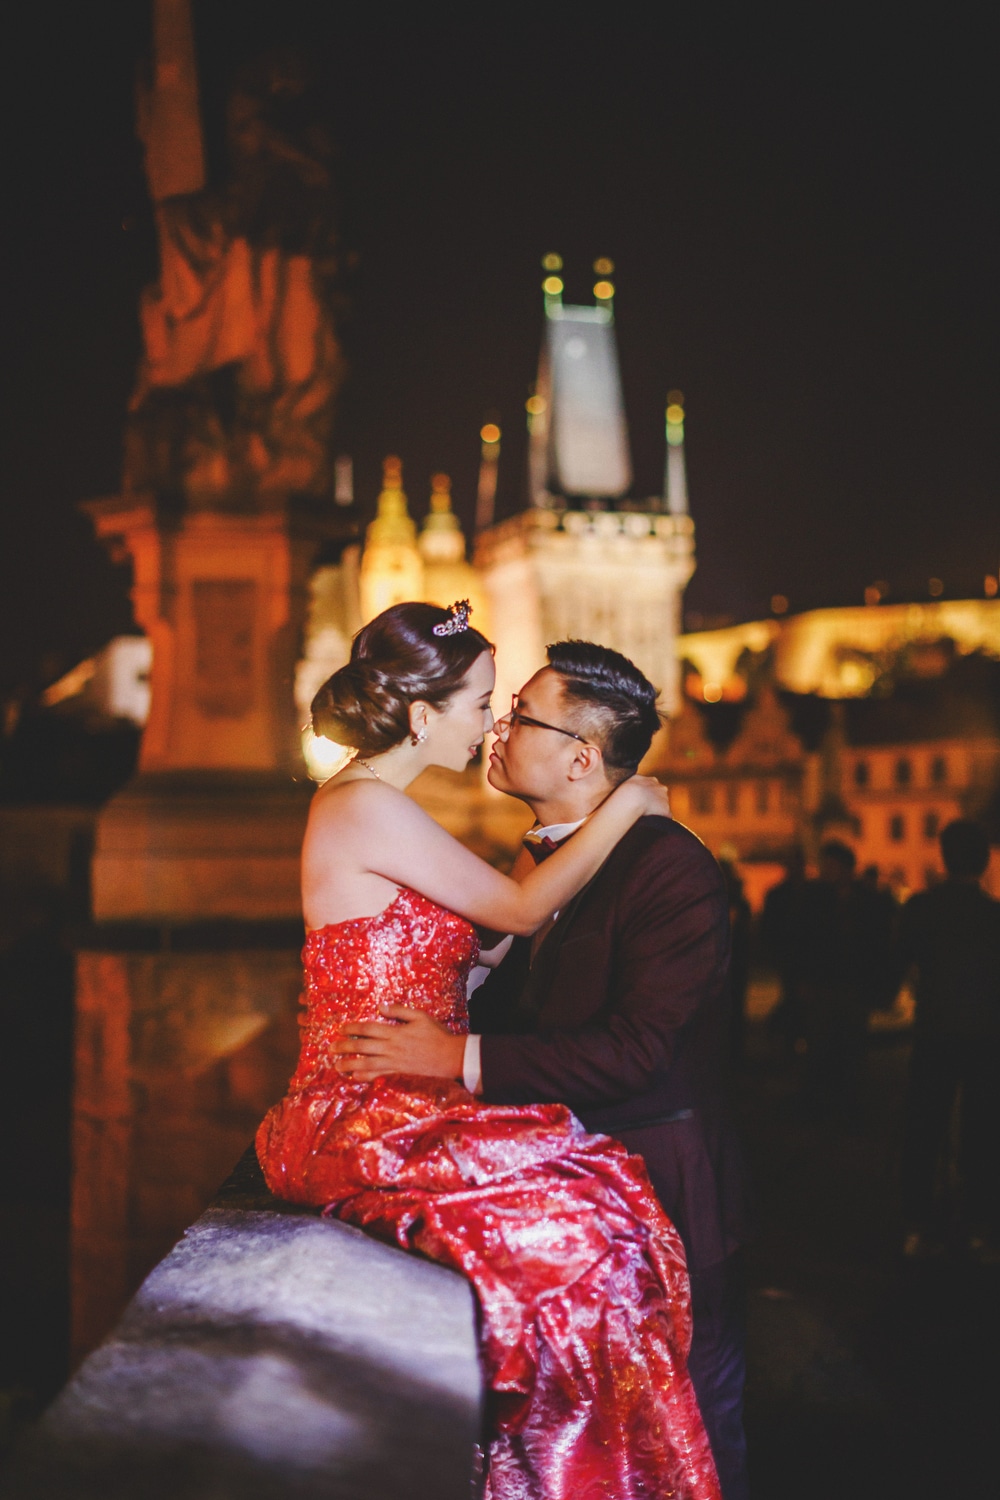 Prague Charles Bridge, young couple, red dress, embracing, night time photo